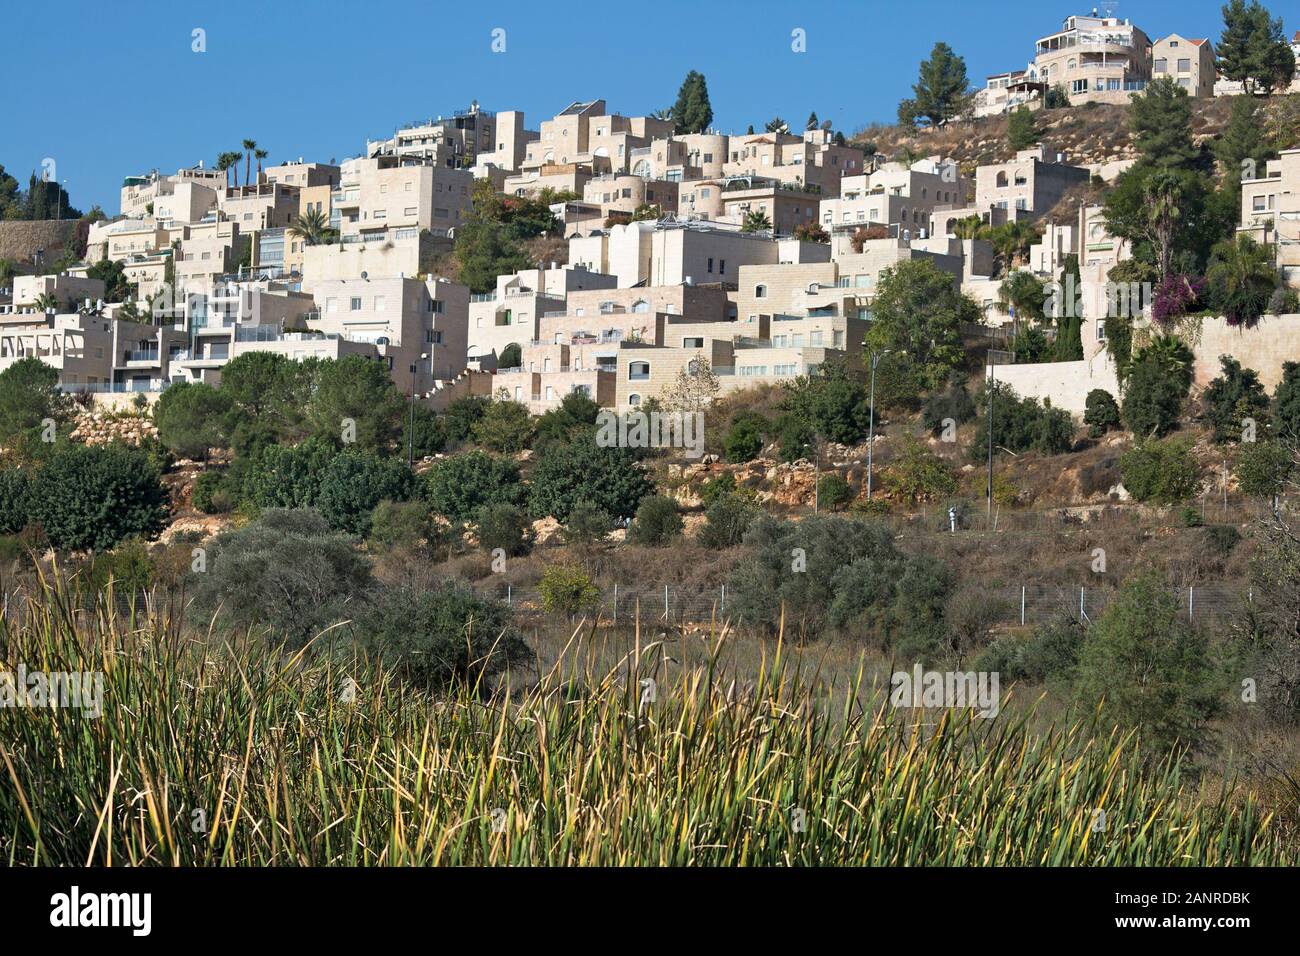 West Jerusalem neighborhood built on a hill overlooking Gazelle Valley, an urban nature reserve in Israel Stock Photo